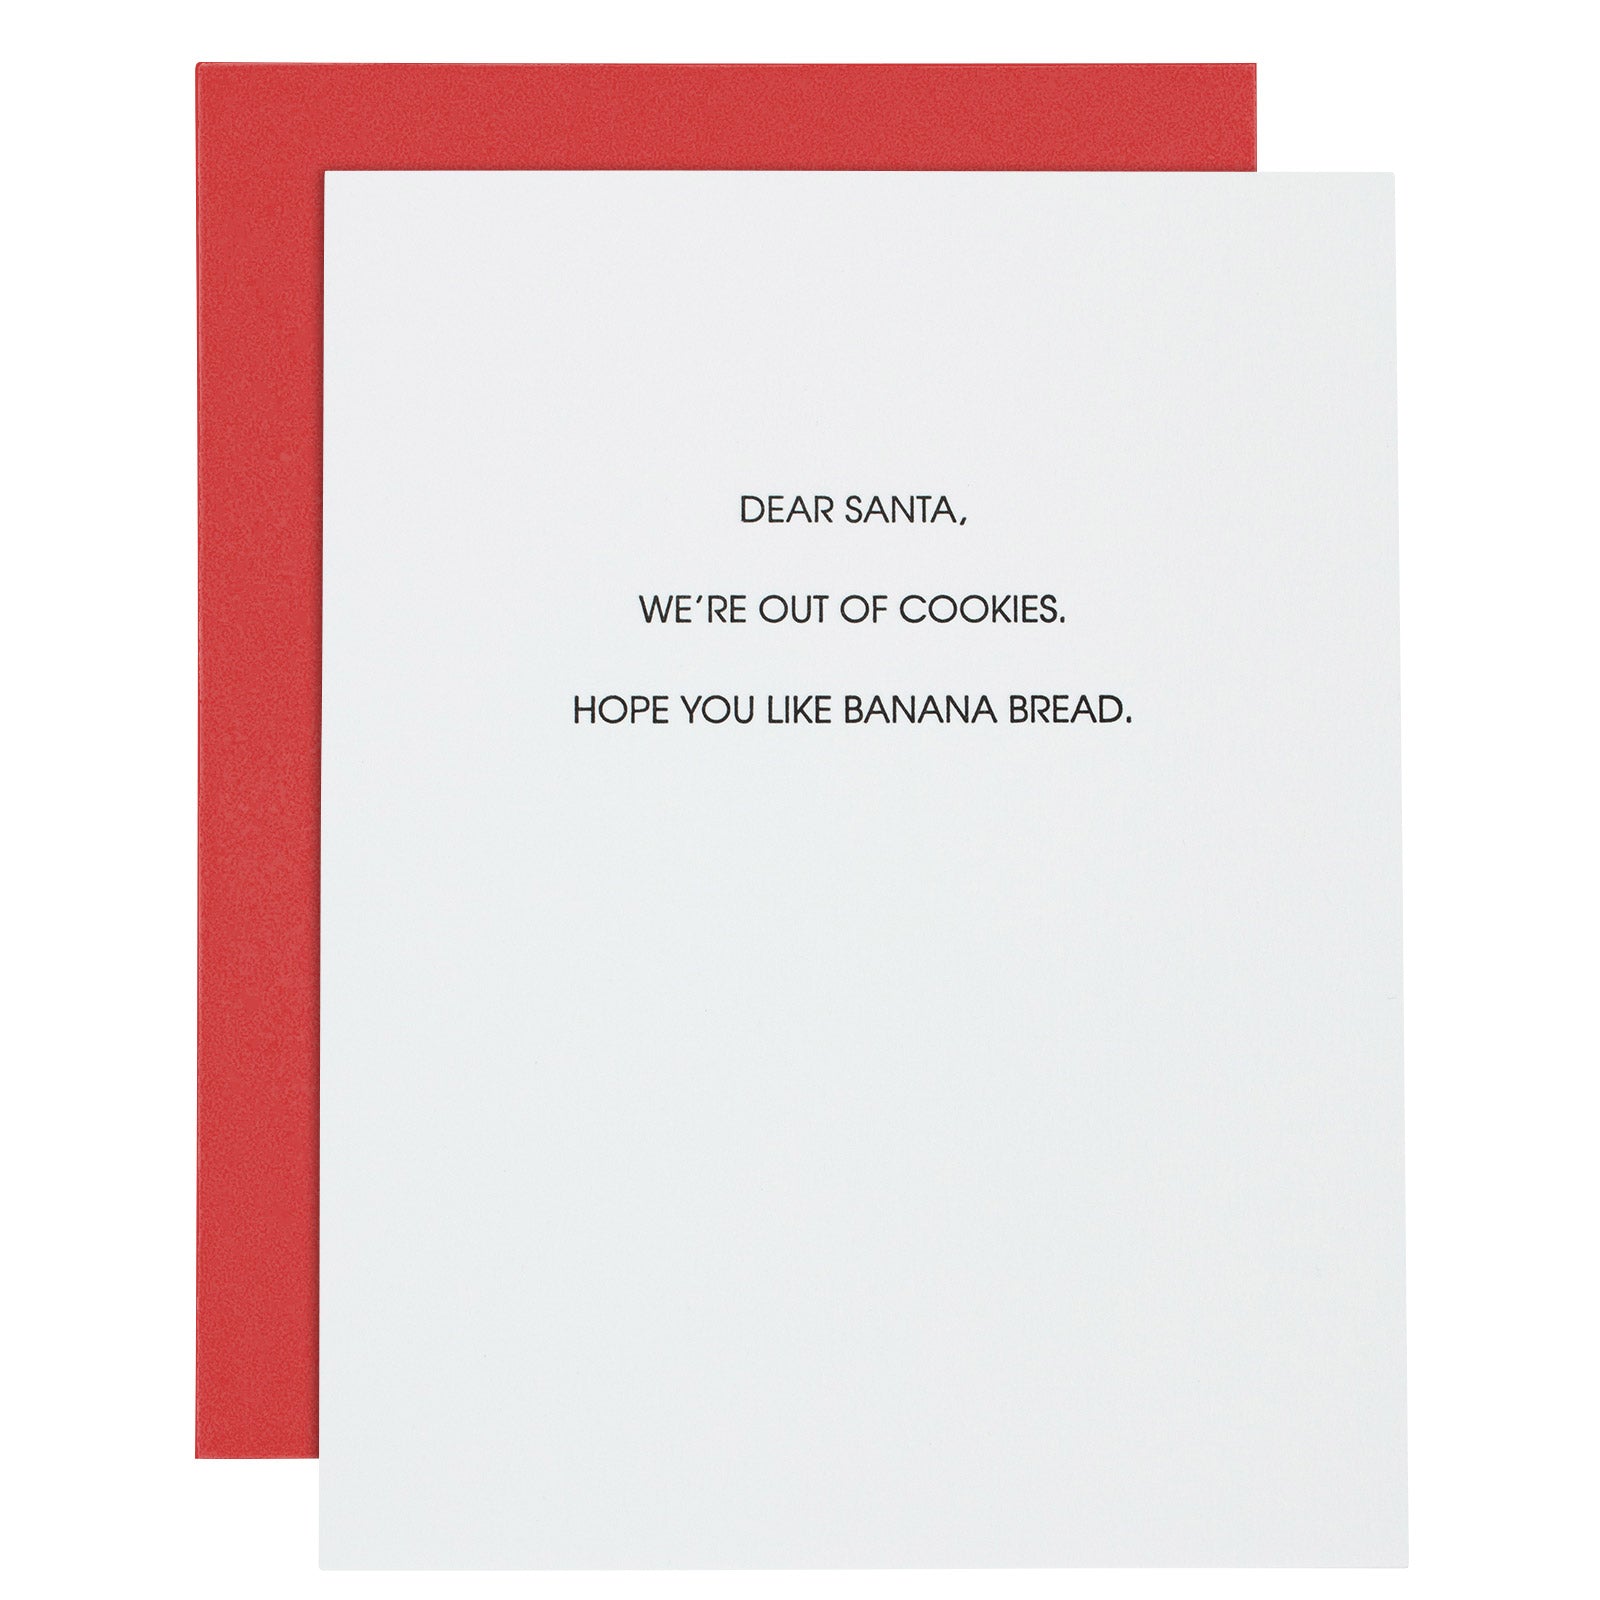 Dear Santa, We're Out of Cookies. Hope You Like Banana Bread - Letterpress Card